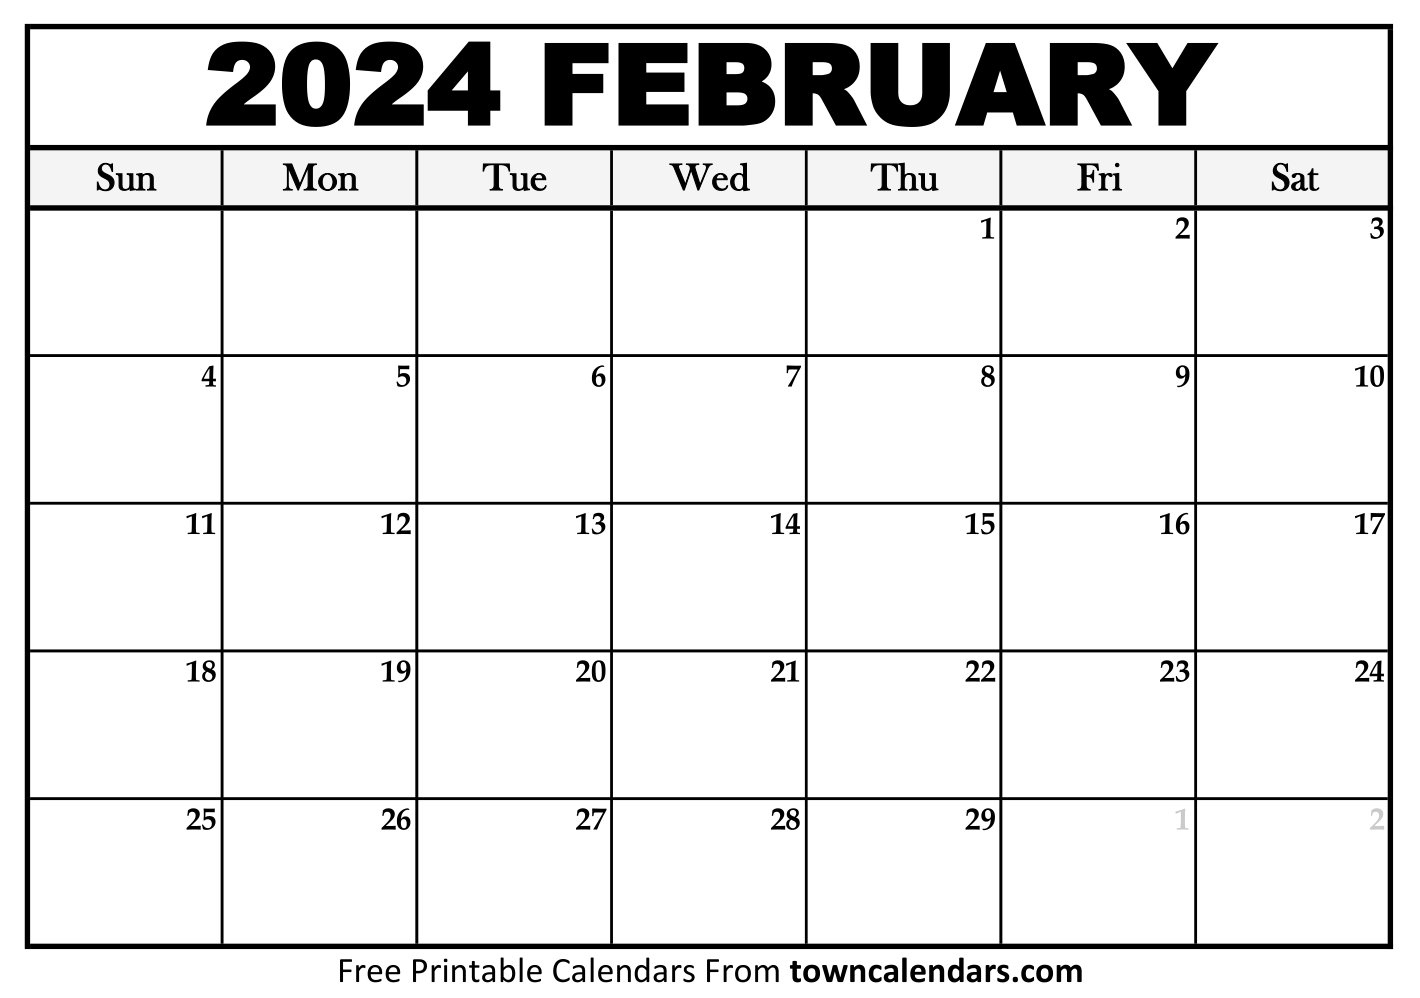 Printable February 2024 Calendar - Towncalendars in Free Printable Calendar 2024 Monday Through Friday